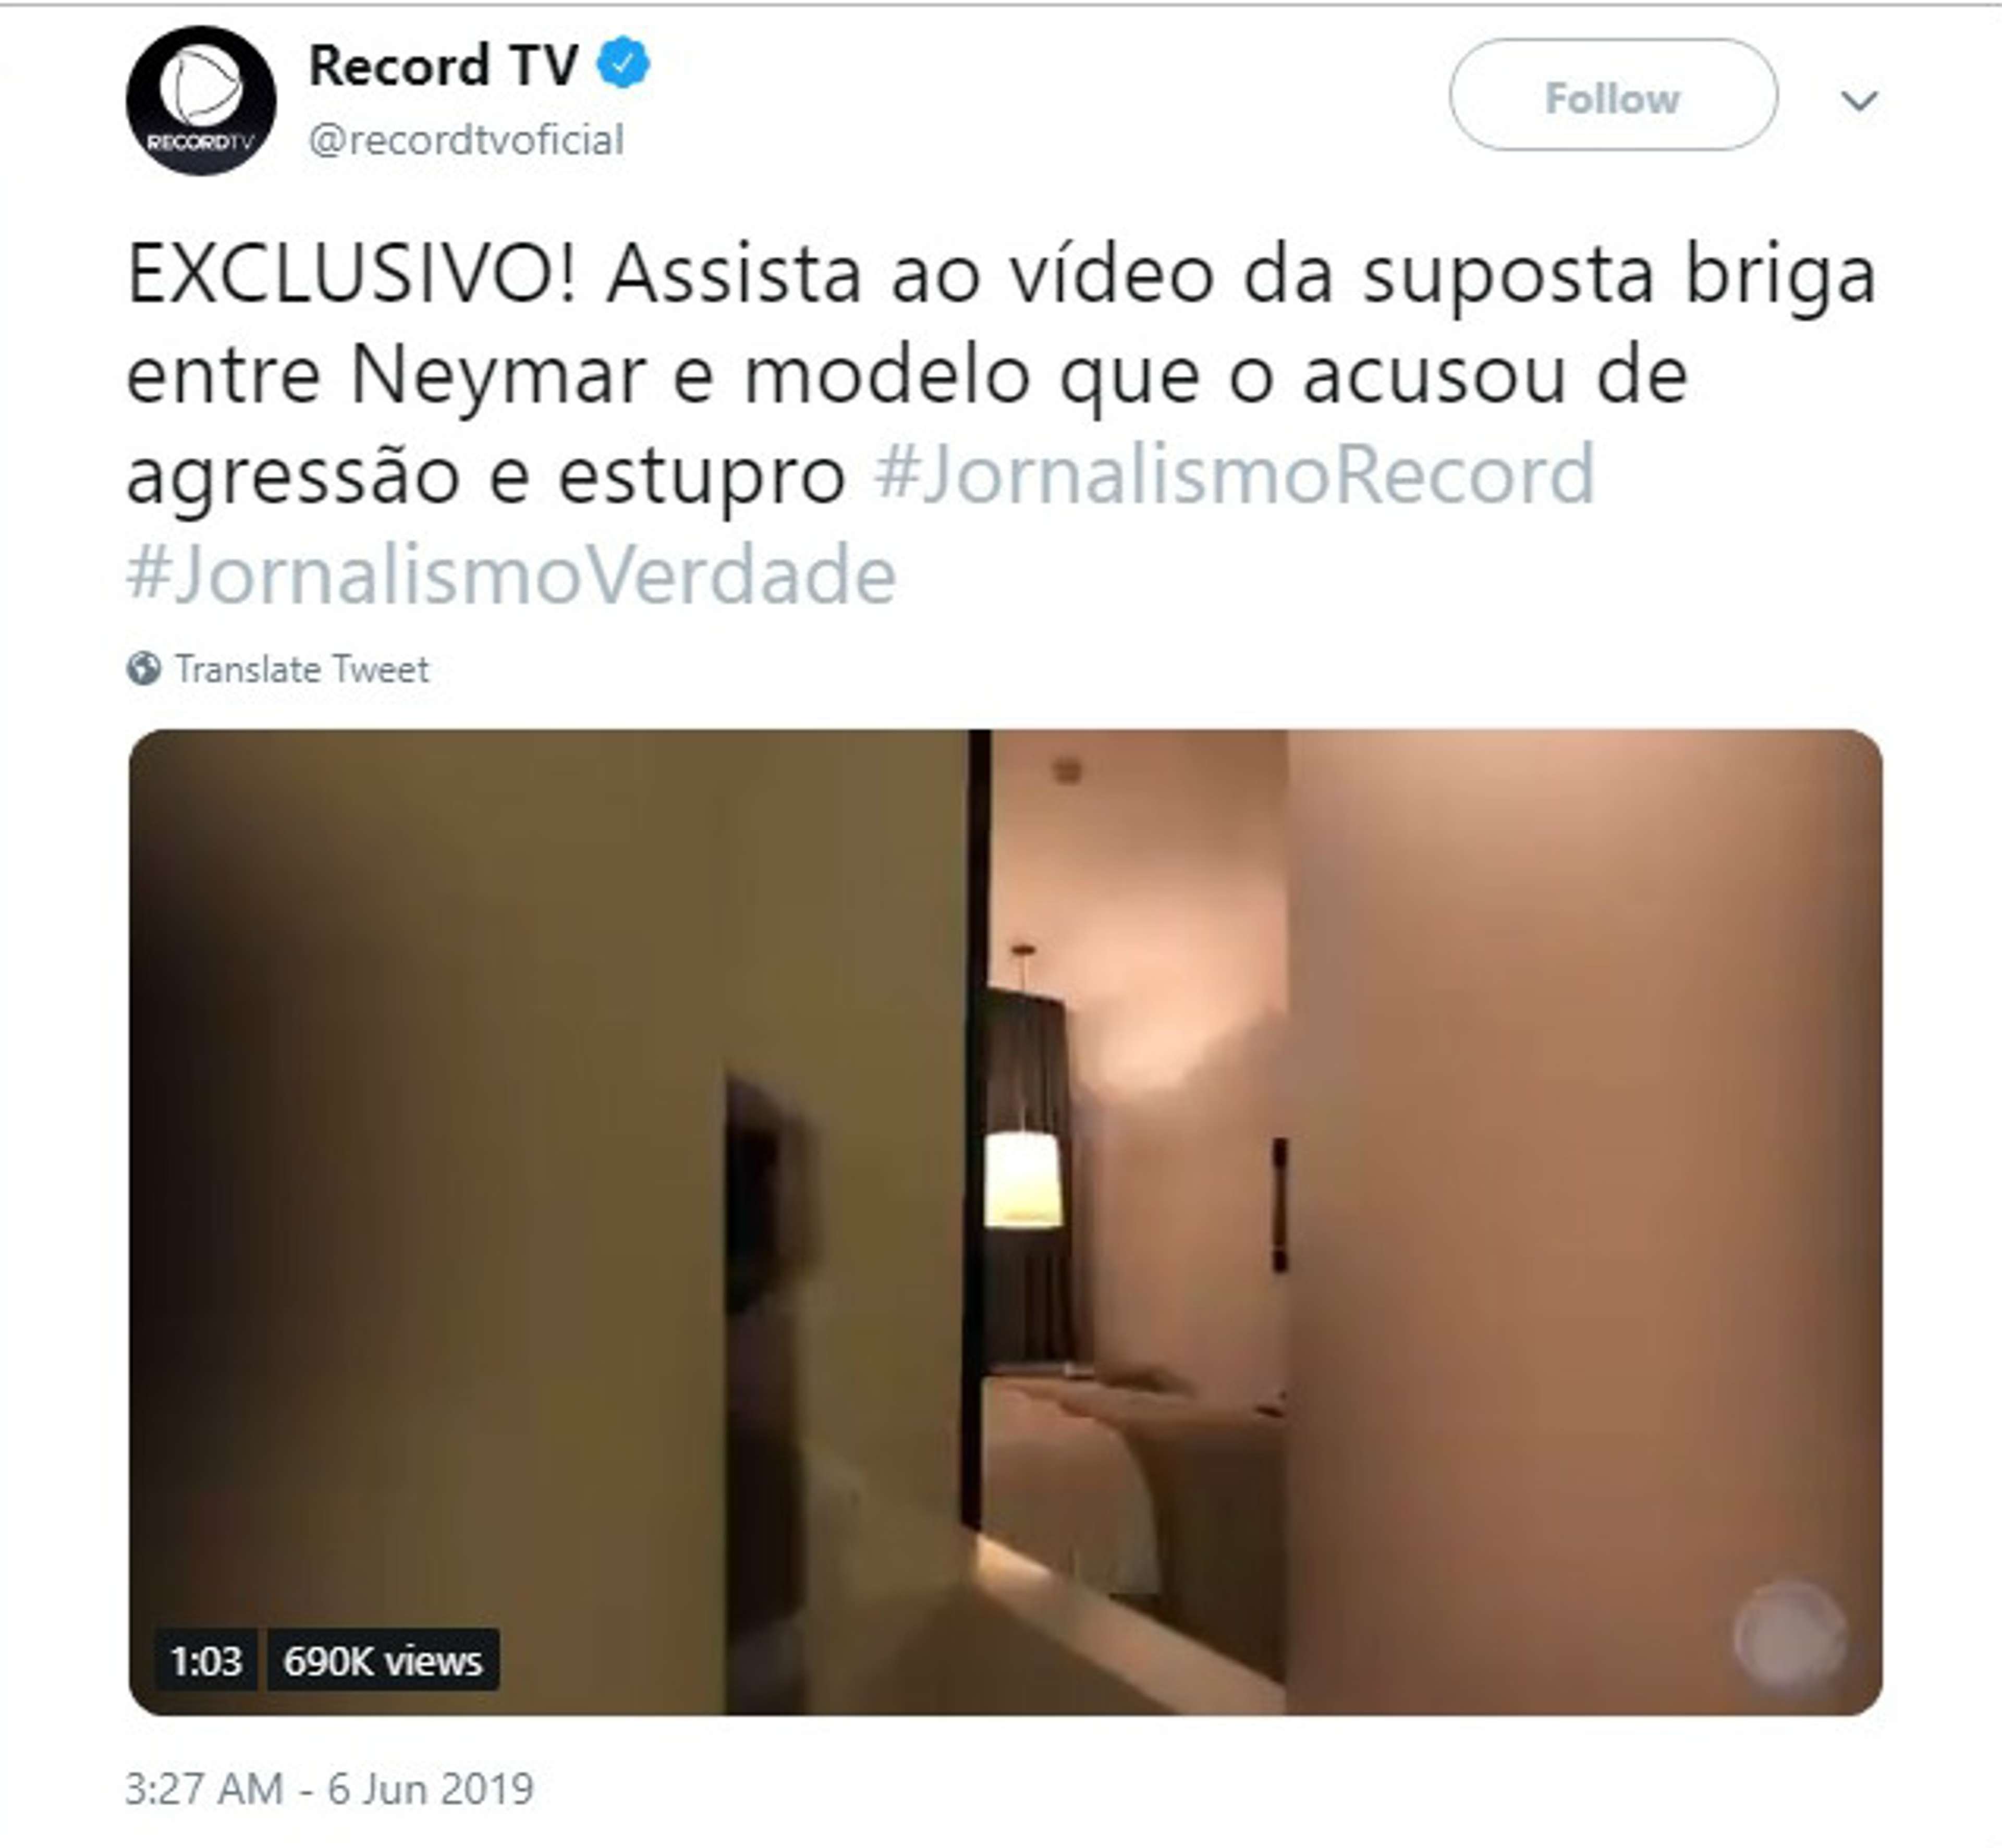 EMBED ONLY Neymar Video